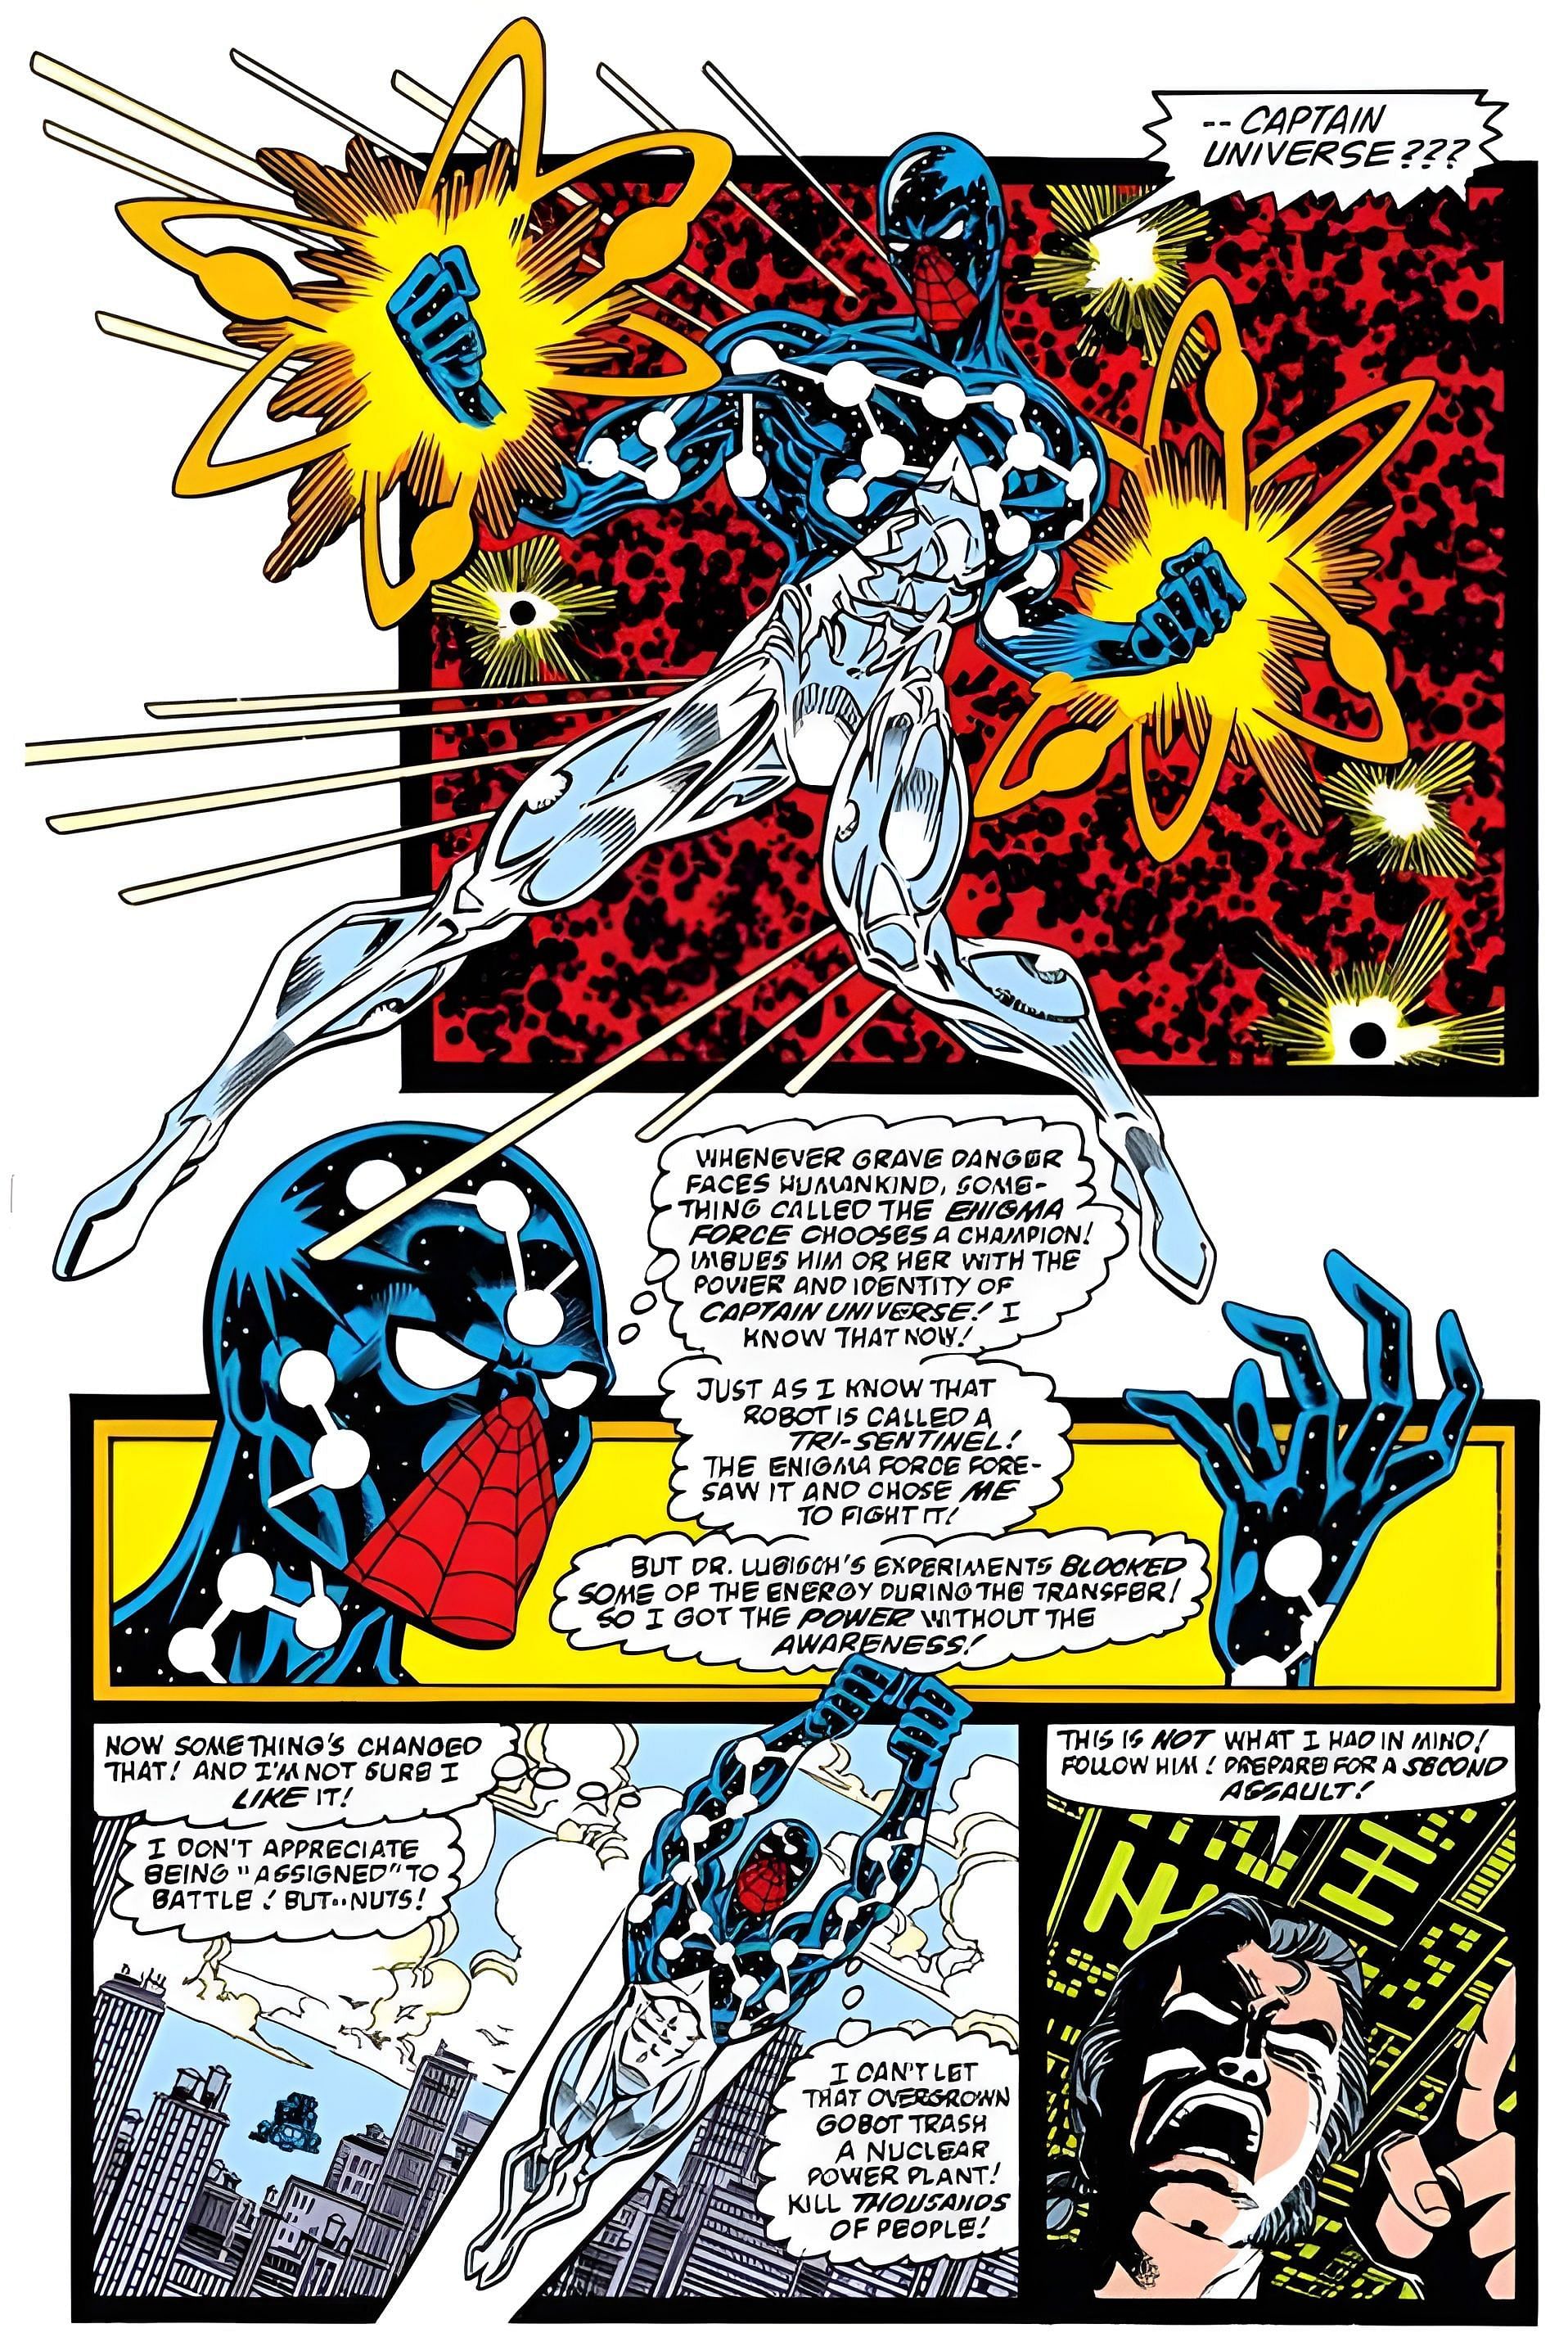 Captain Universe (Image via Marvel Comics)